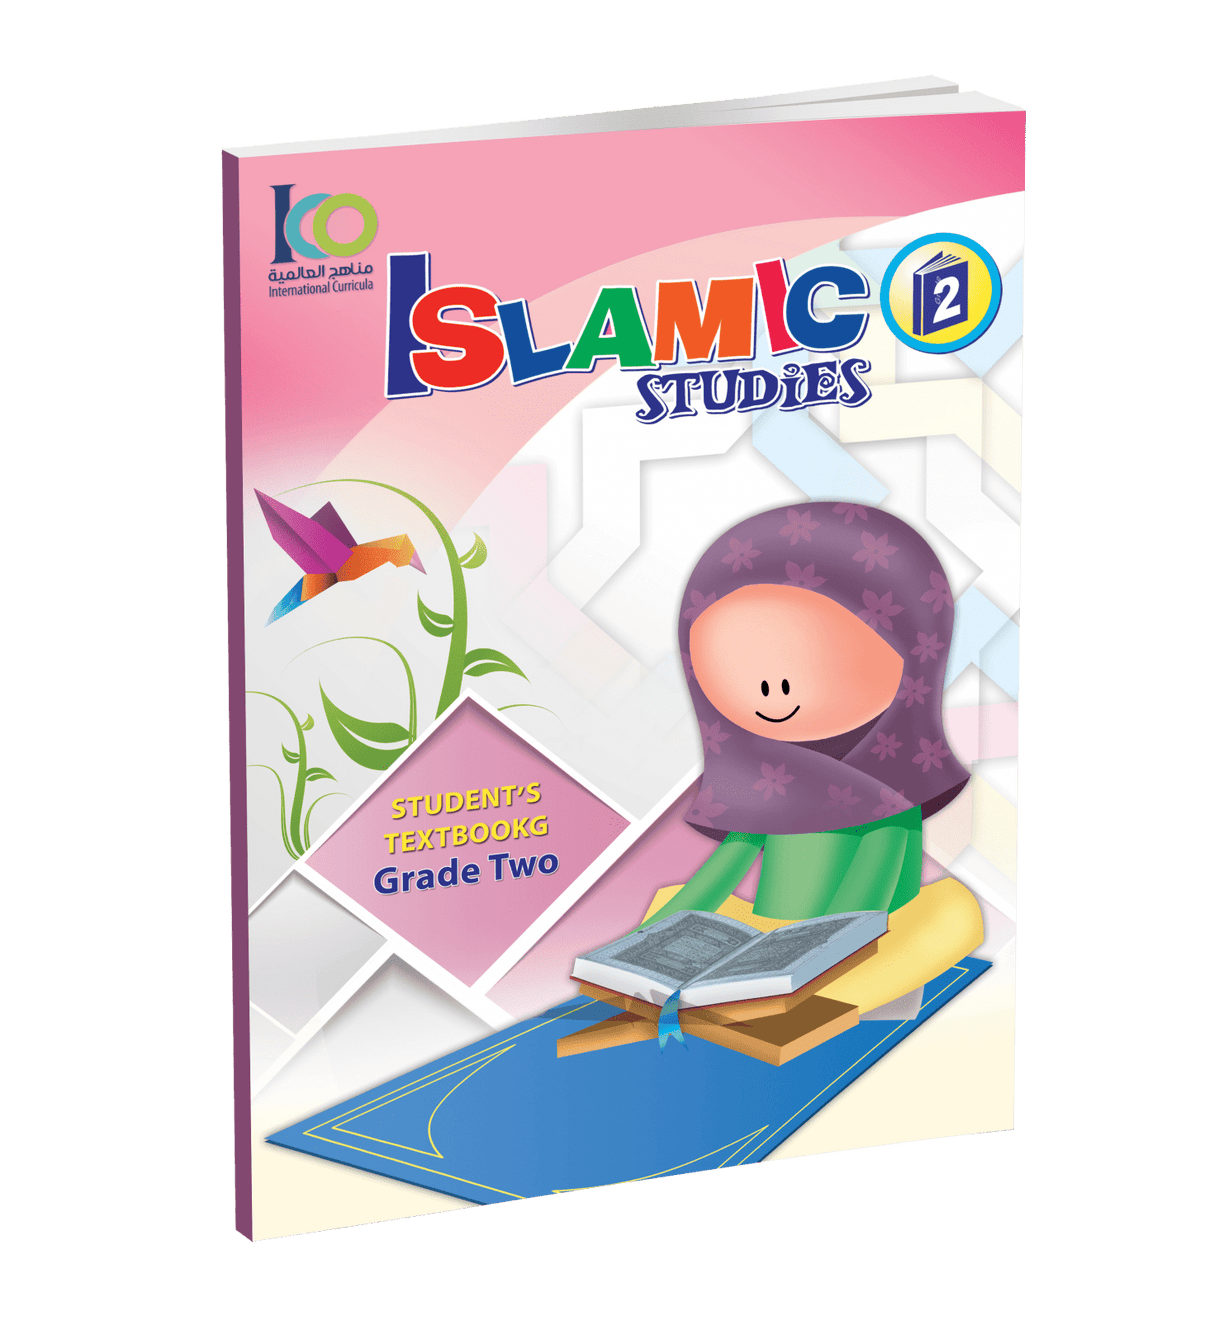 ICO Islamic Studies Textbook Grade 2 Light edition